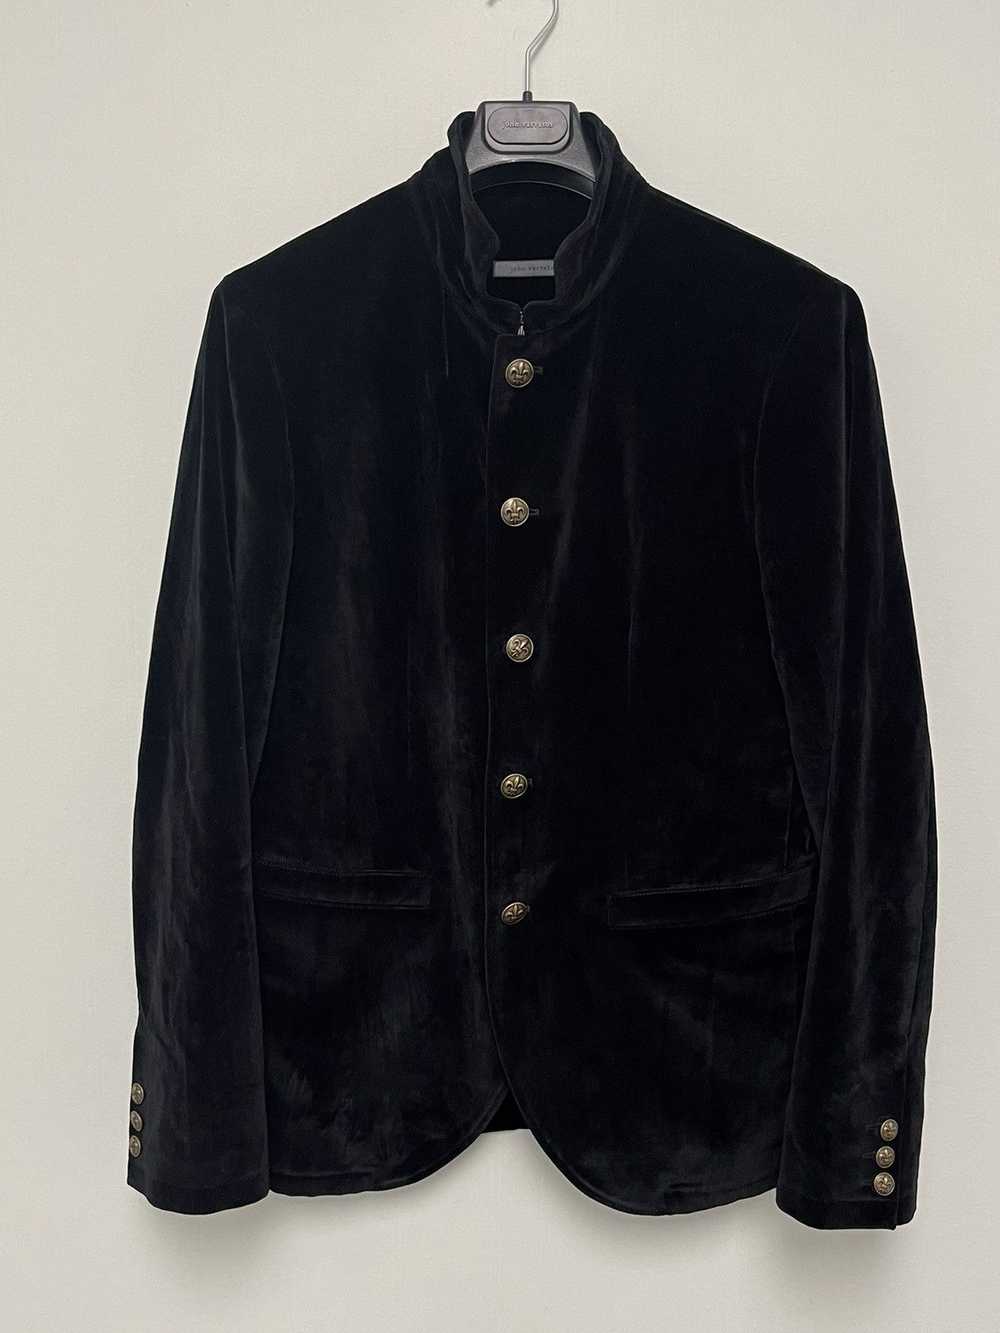 John Varvatos Crushed velvet jacket. Black. 50 - image 6